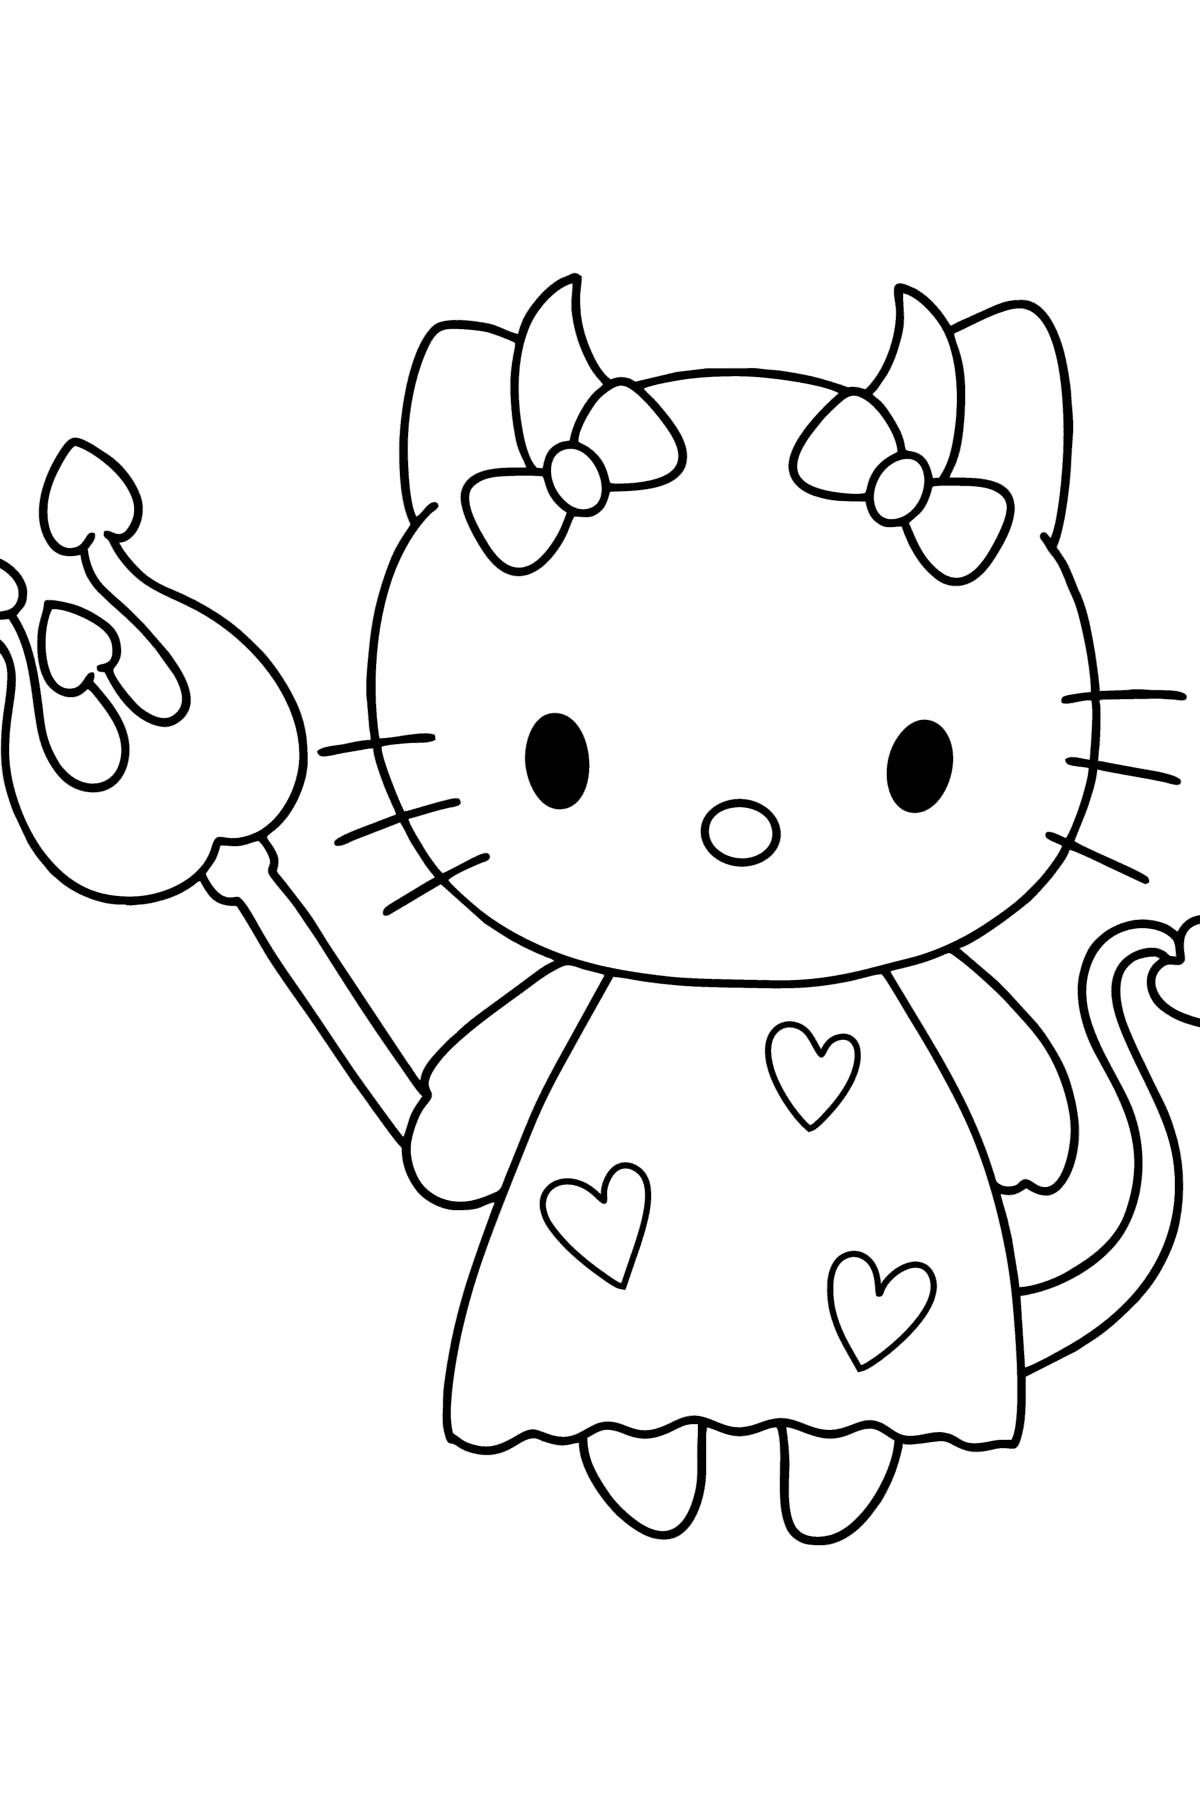 Раскраска Хелло Китти (Hello Kitty) дьявол - Картинки для Детей